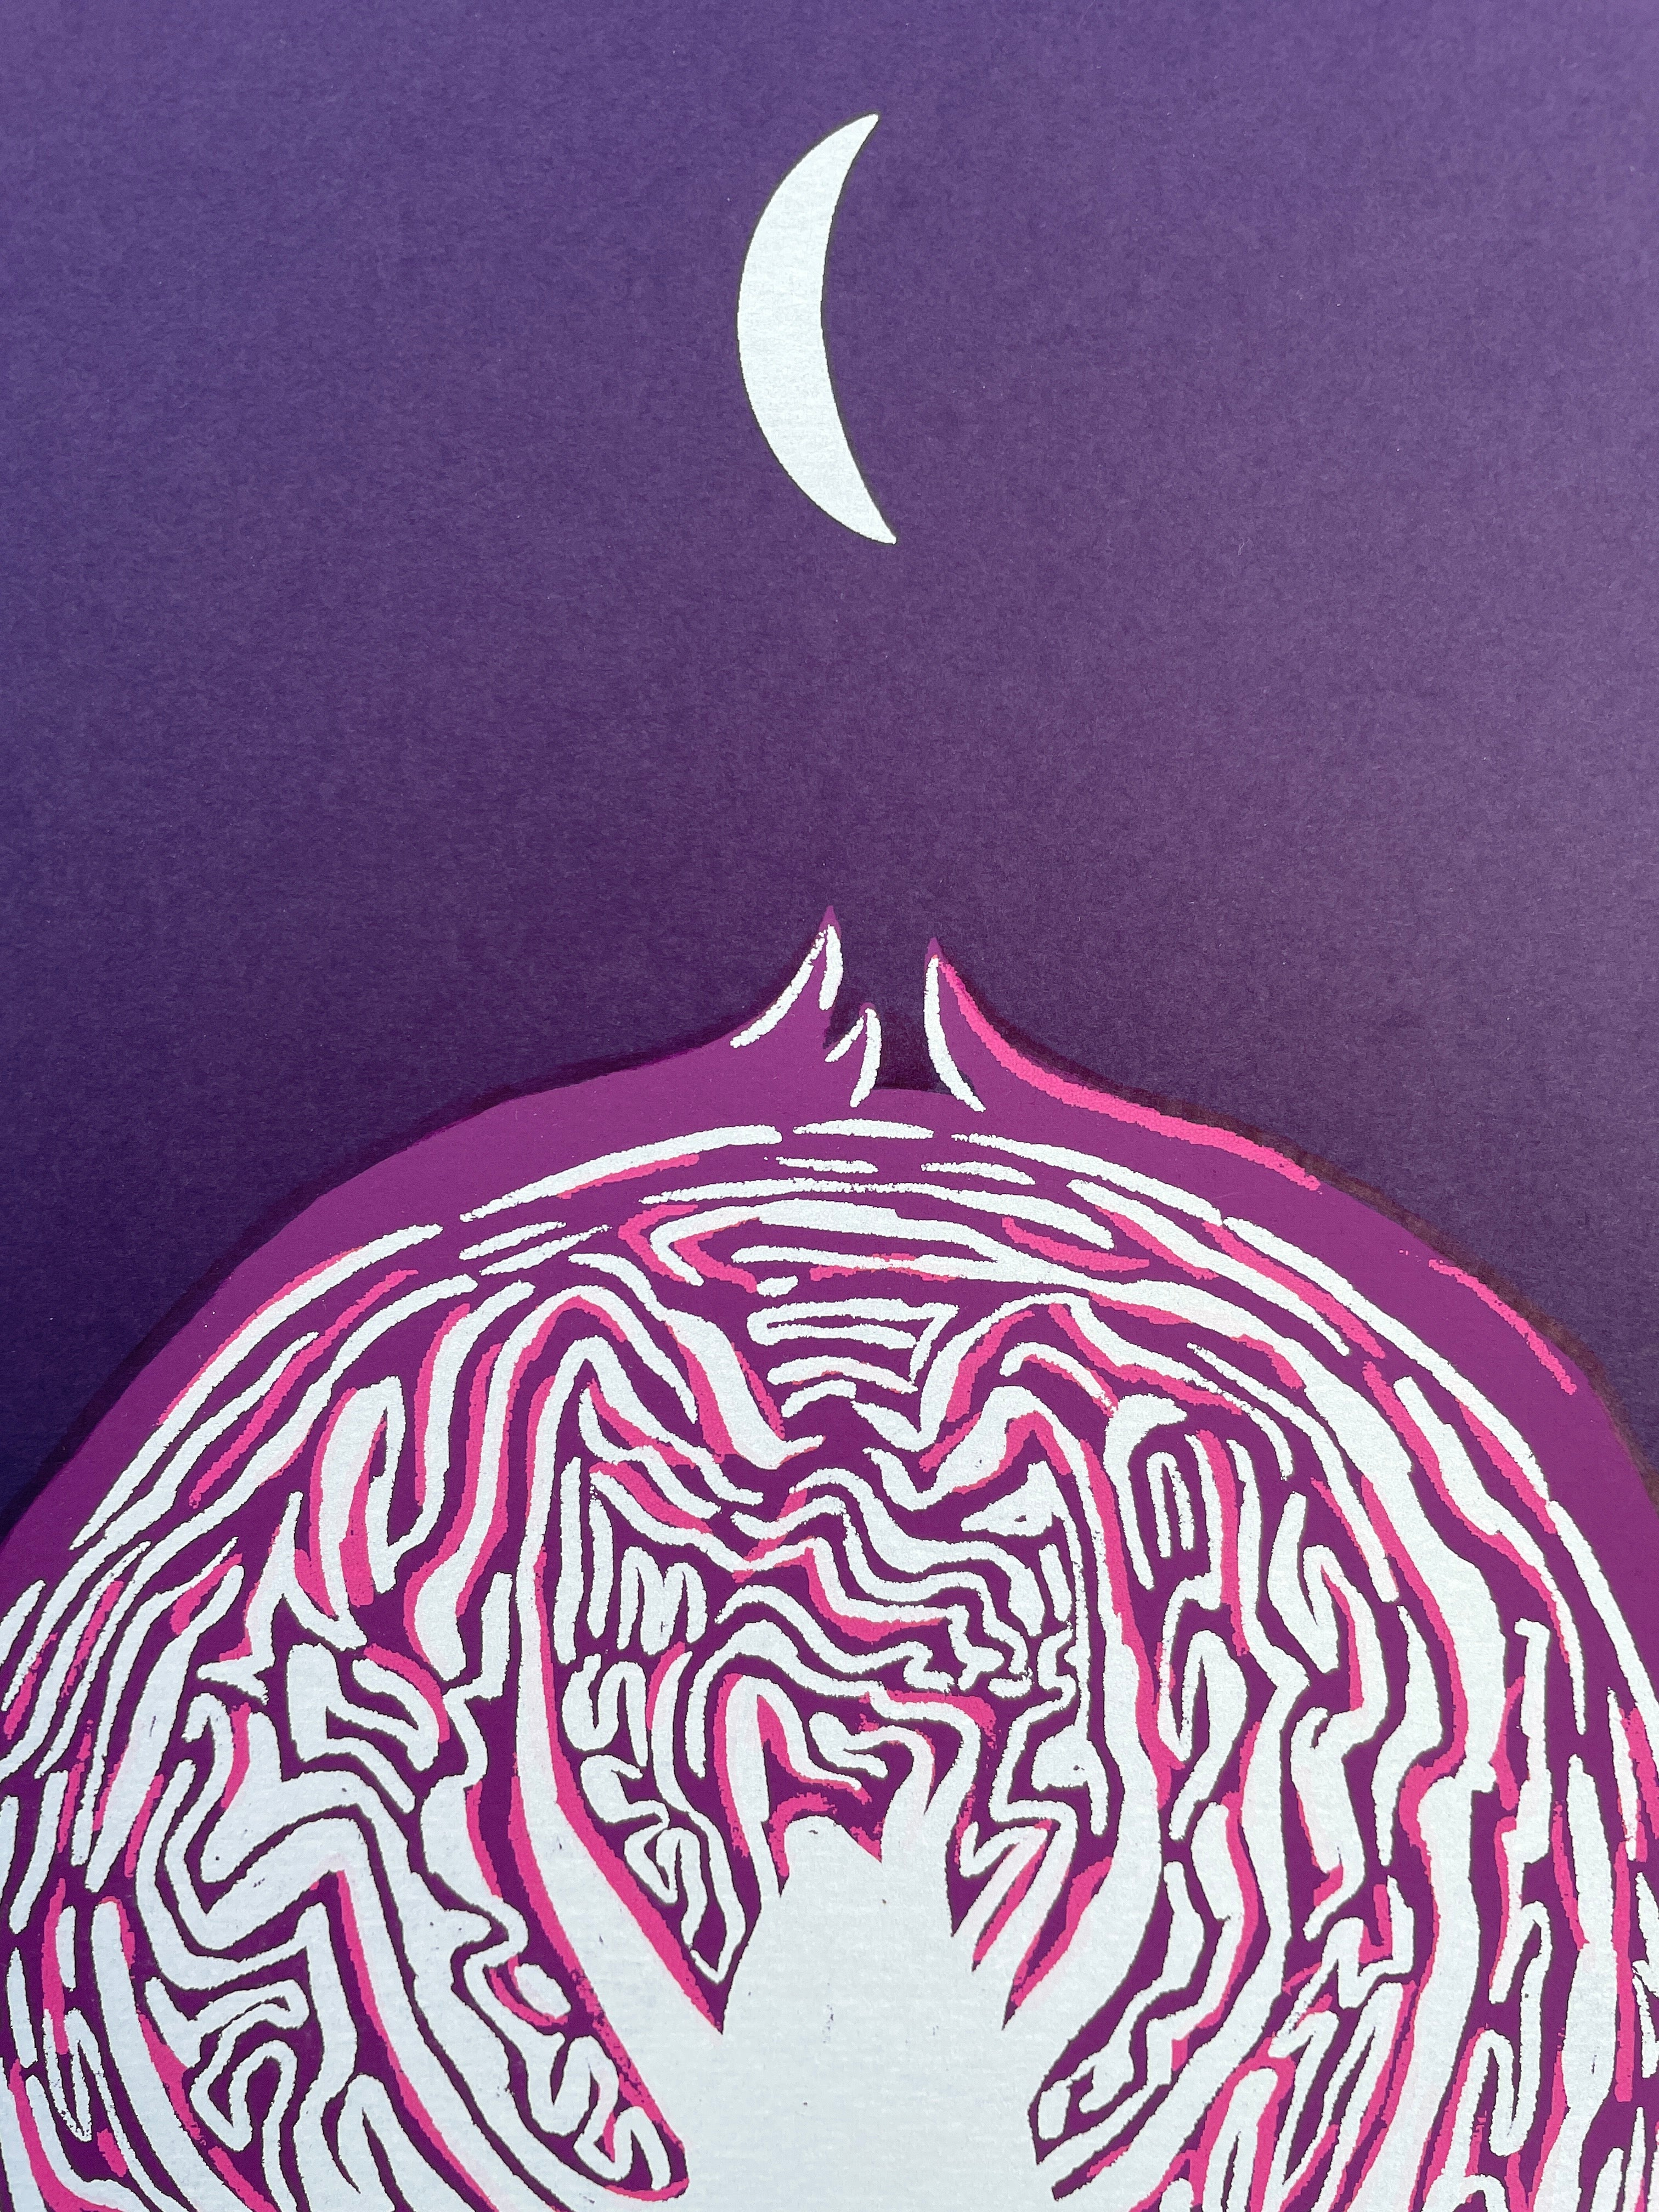 Cabbage Moon Print